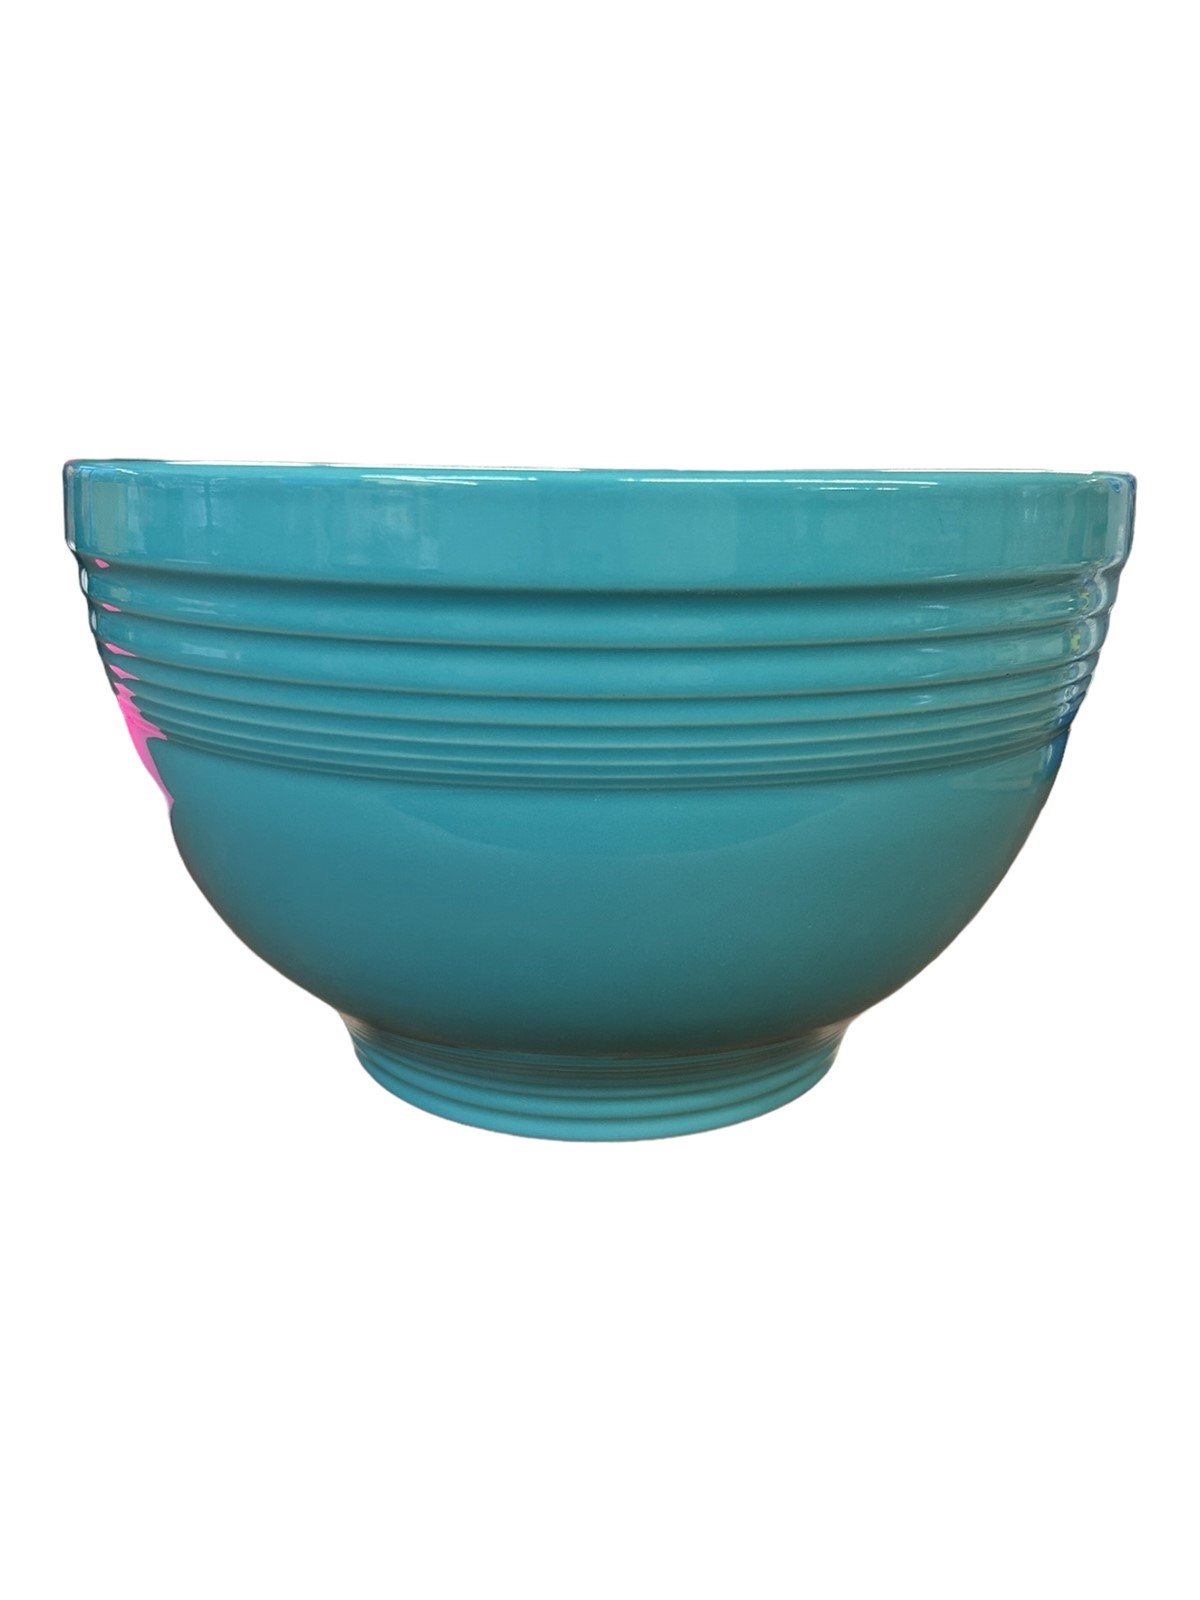 Fiesta - Turquoise Blue Retired 6qt Mixing Bowl Nesting Homer Laughlin Ceramic